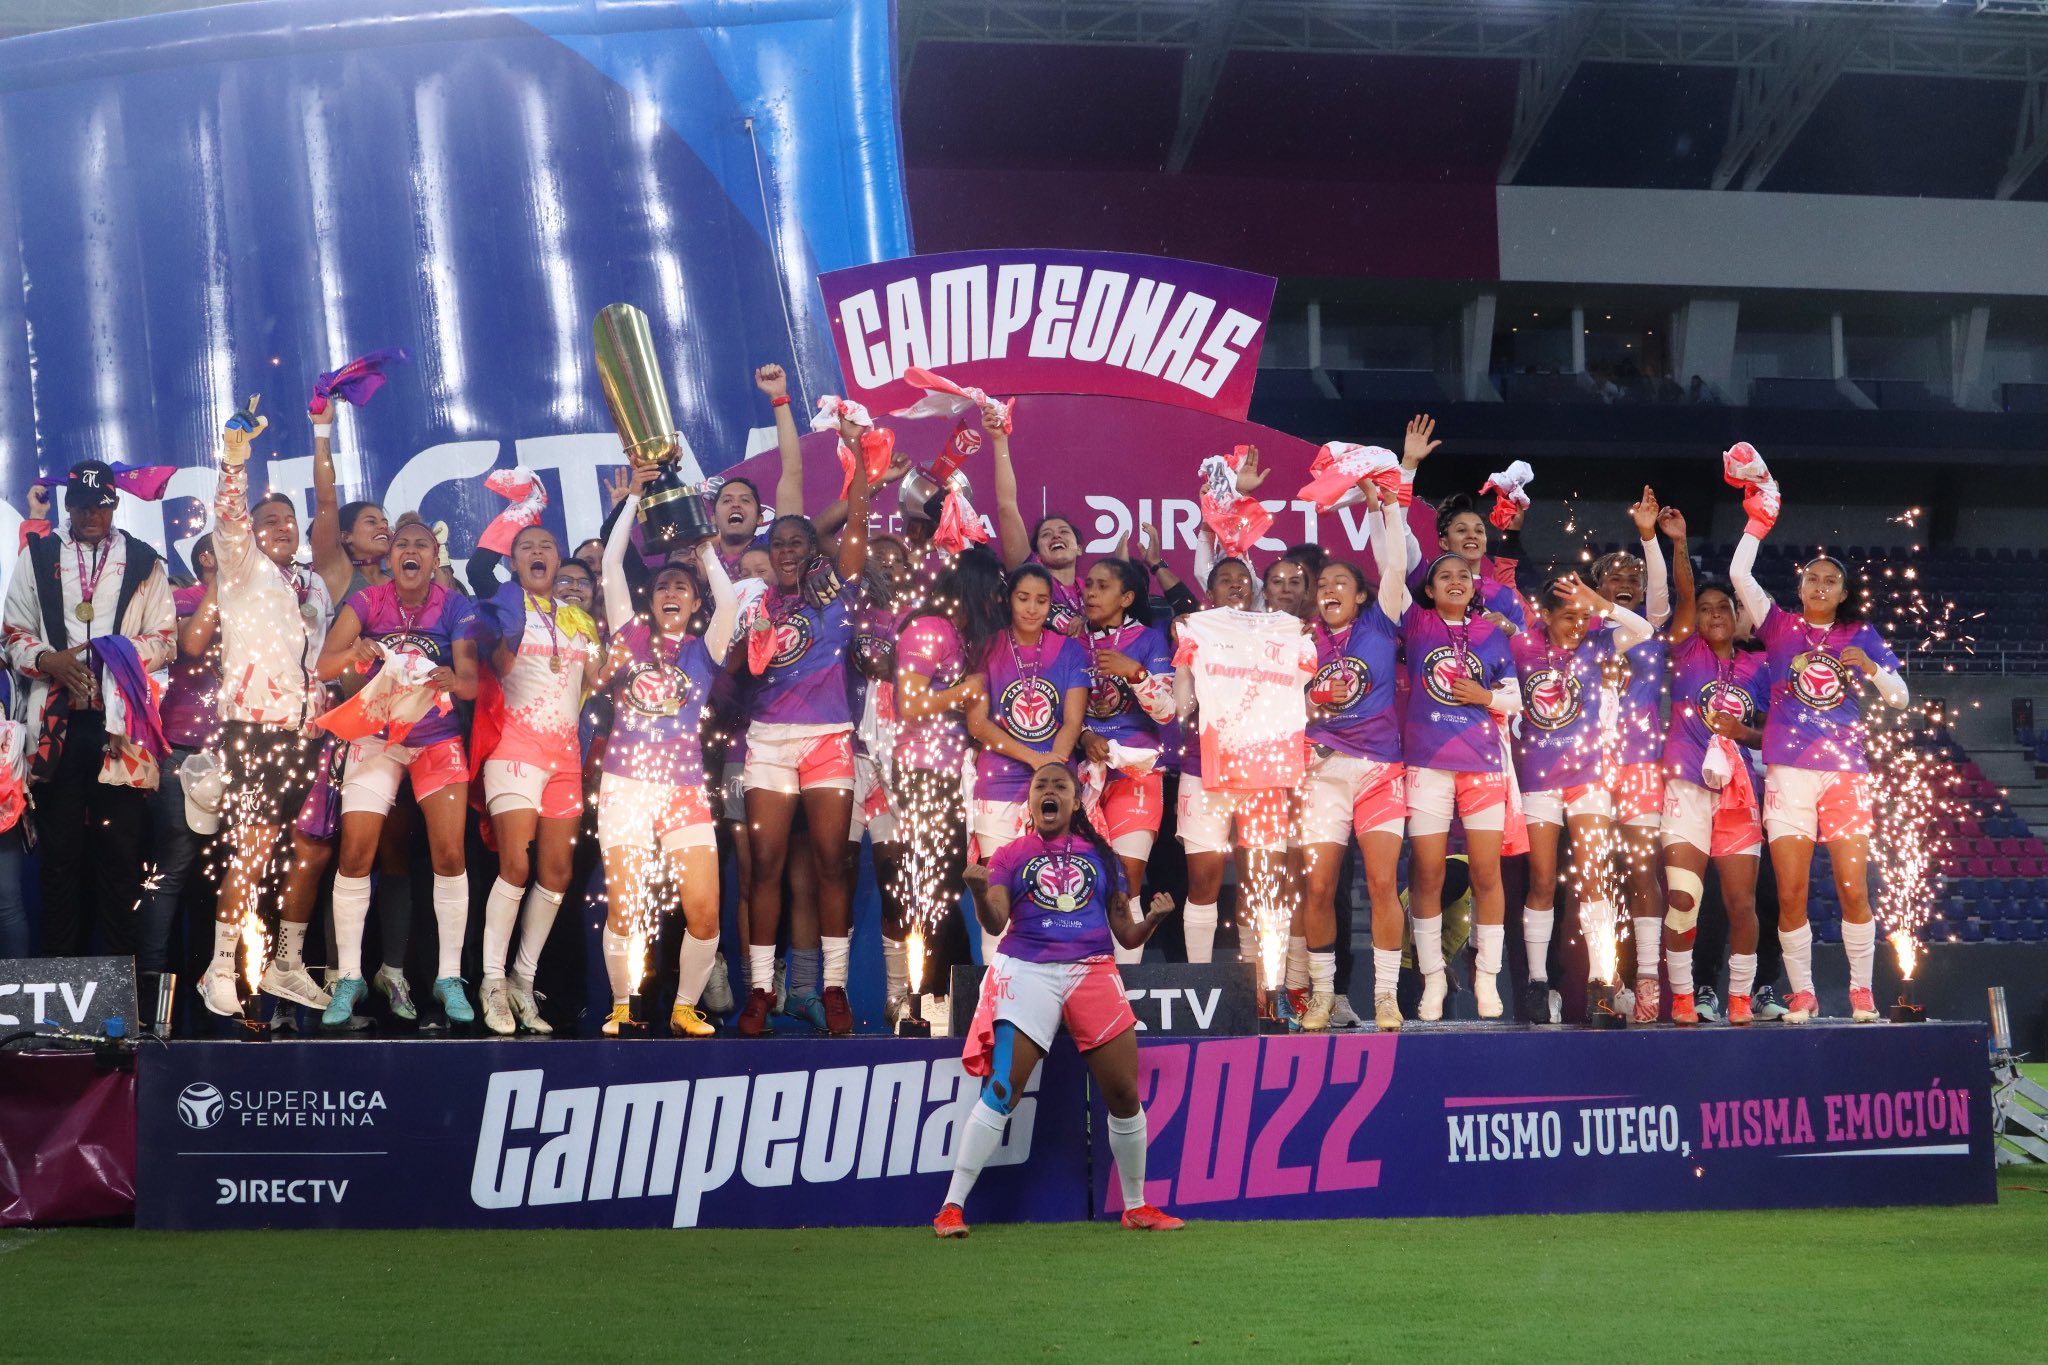 Ñañas consiguió su primer campeonato de la Superliga Femenina. Foto: Twitter Superliga